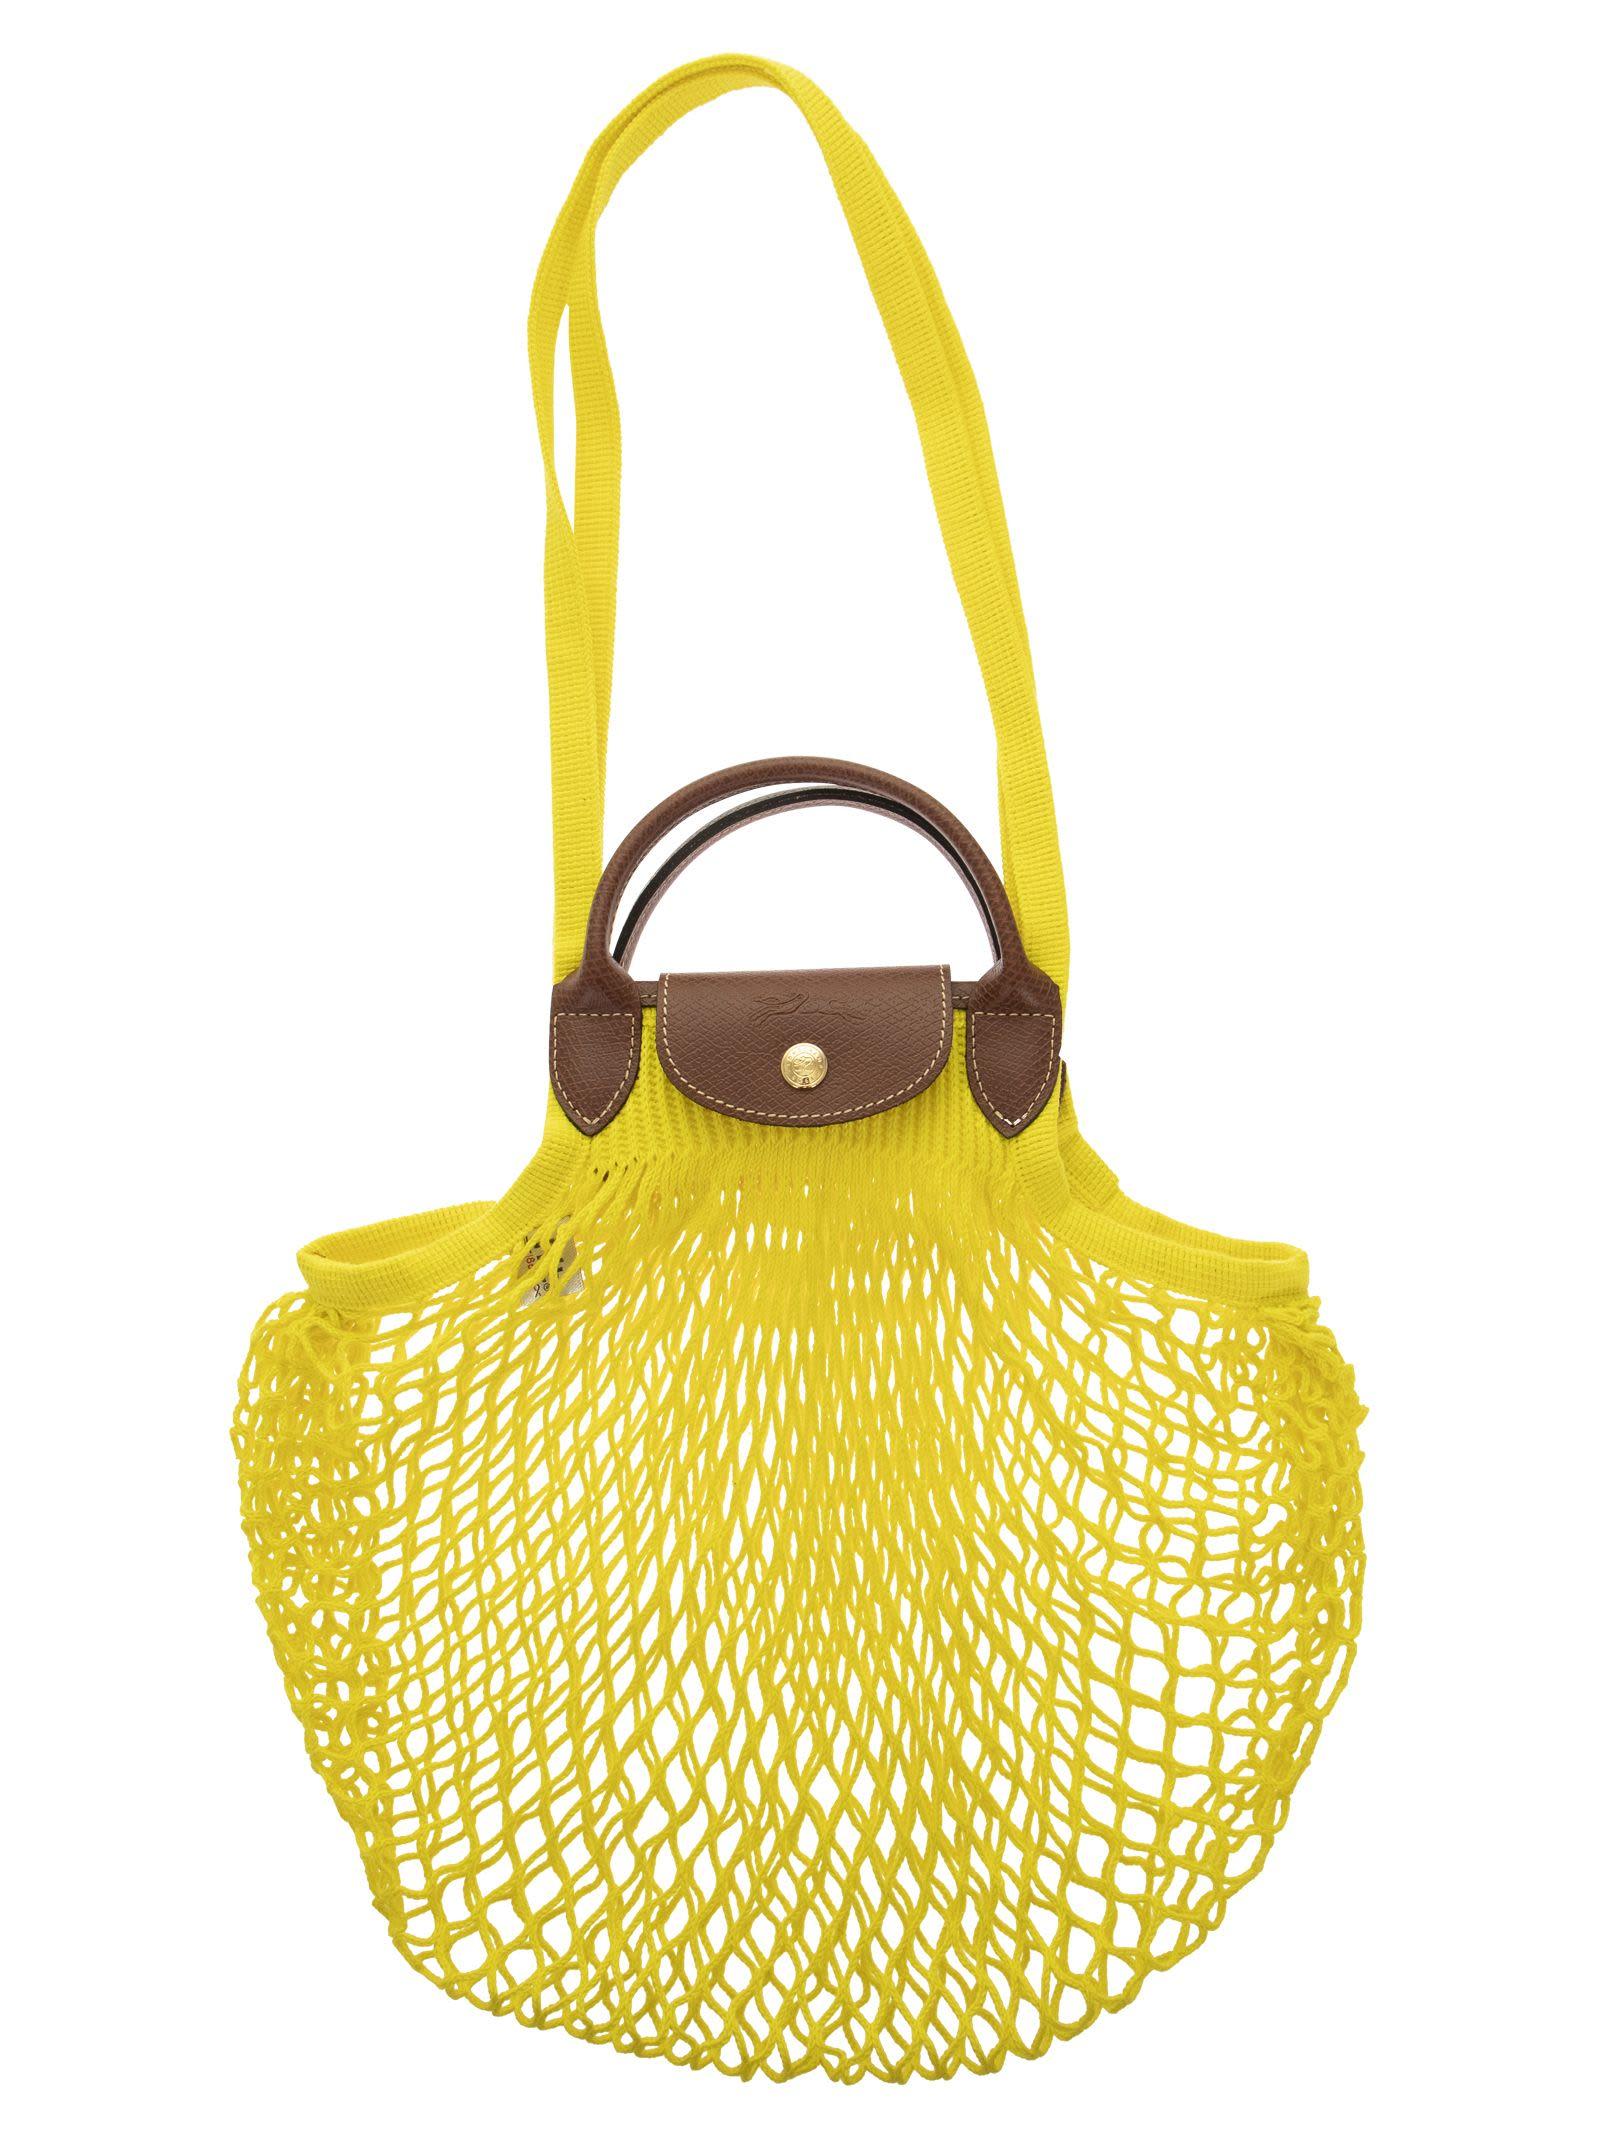 Longchamp `le Pliage Filet Tie And Dye` Net Top Handle Bag in Yellow